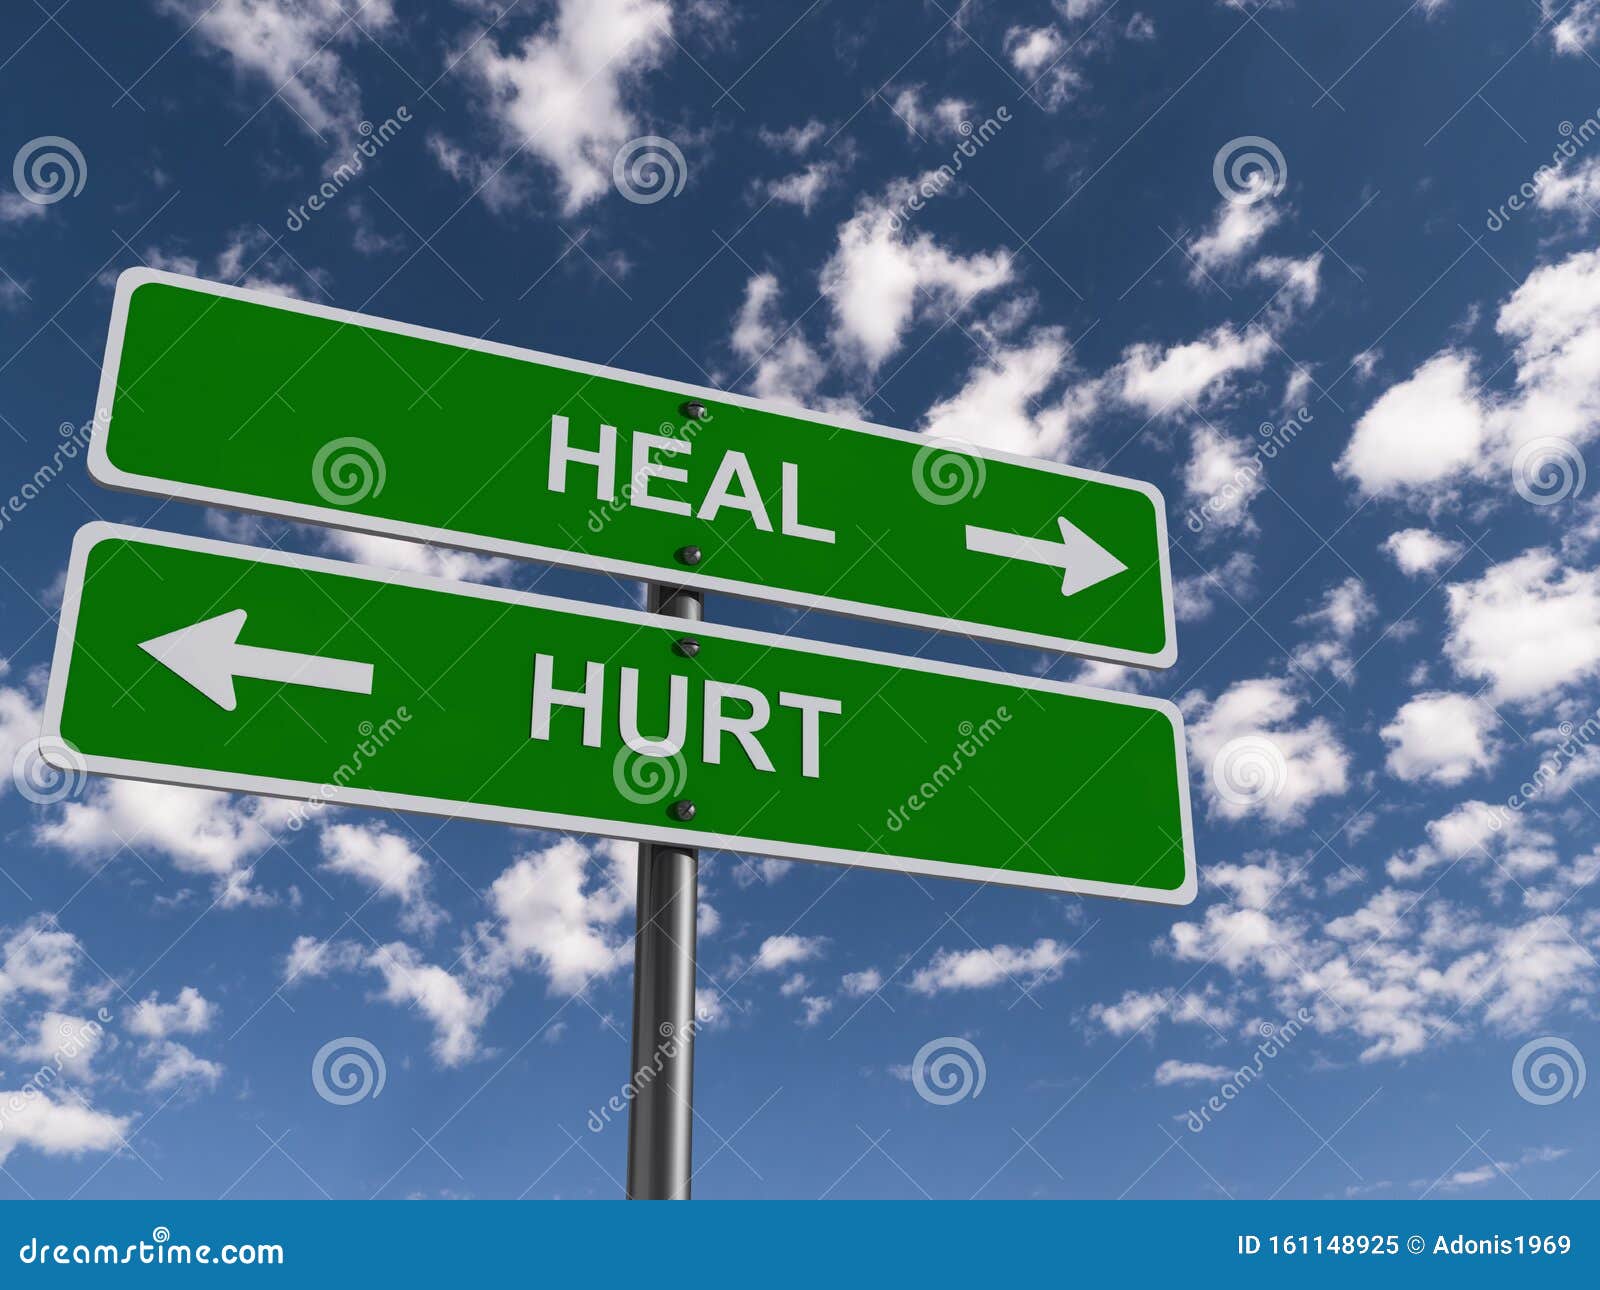 heal hurt traffic sign